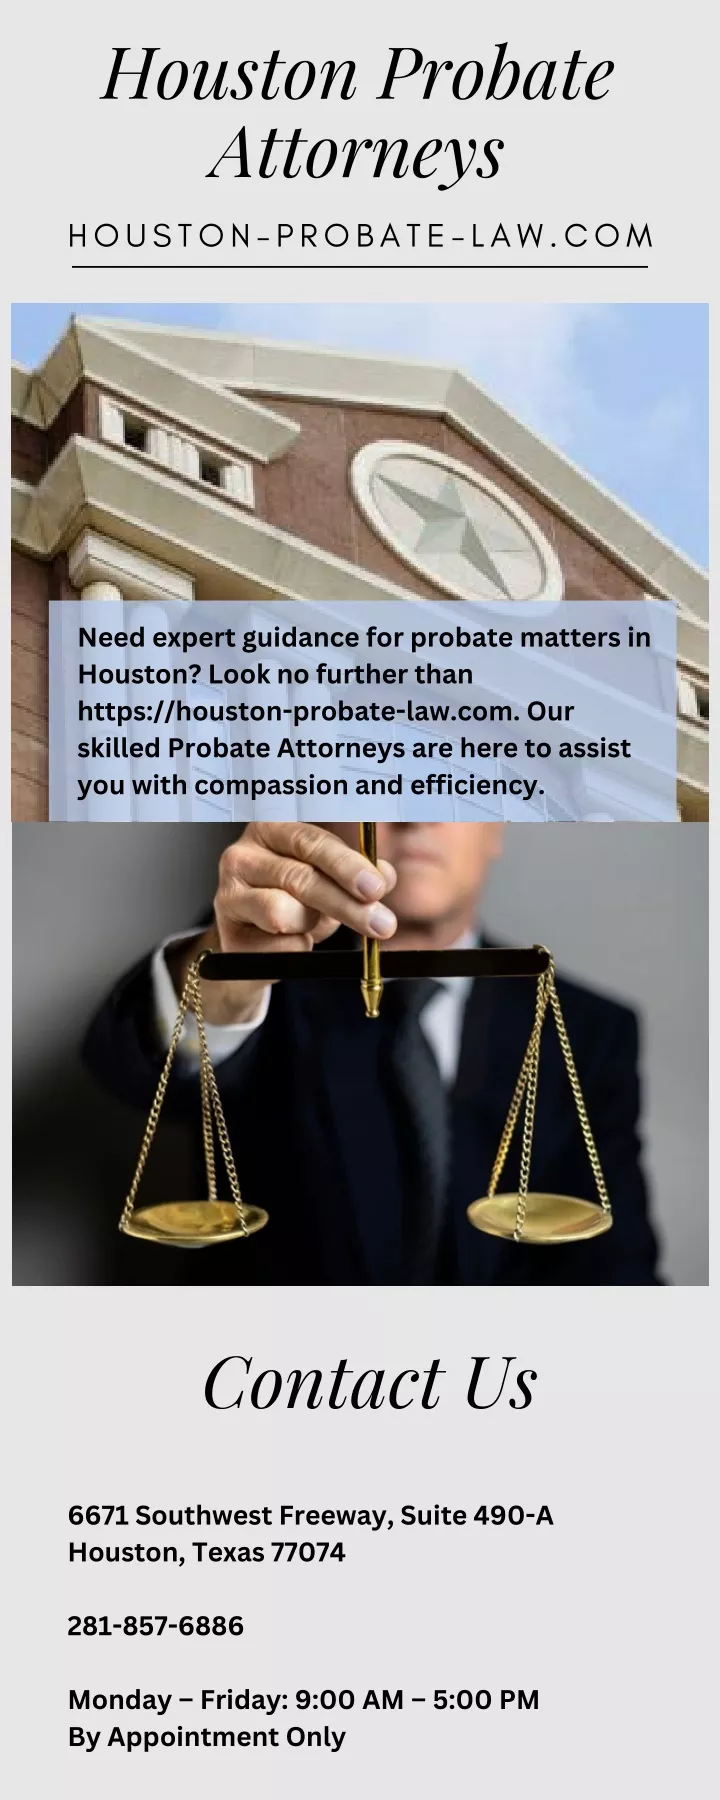 Ppt Houston Probate Attorneys Houston Probate Powerpoint Presentation Id12192443 4942